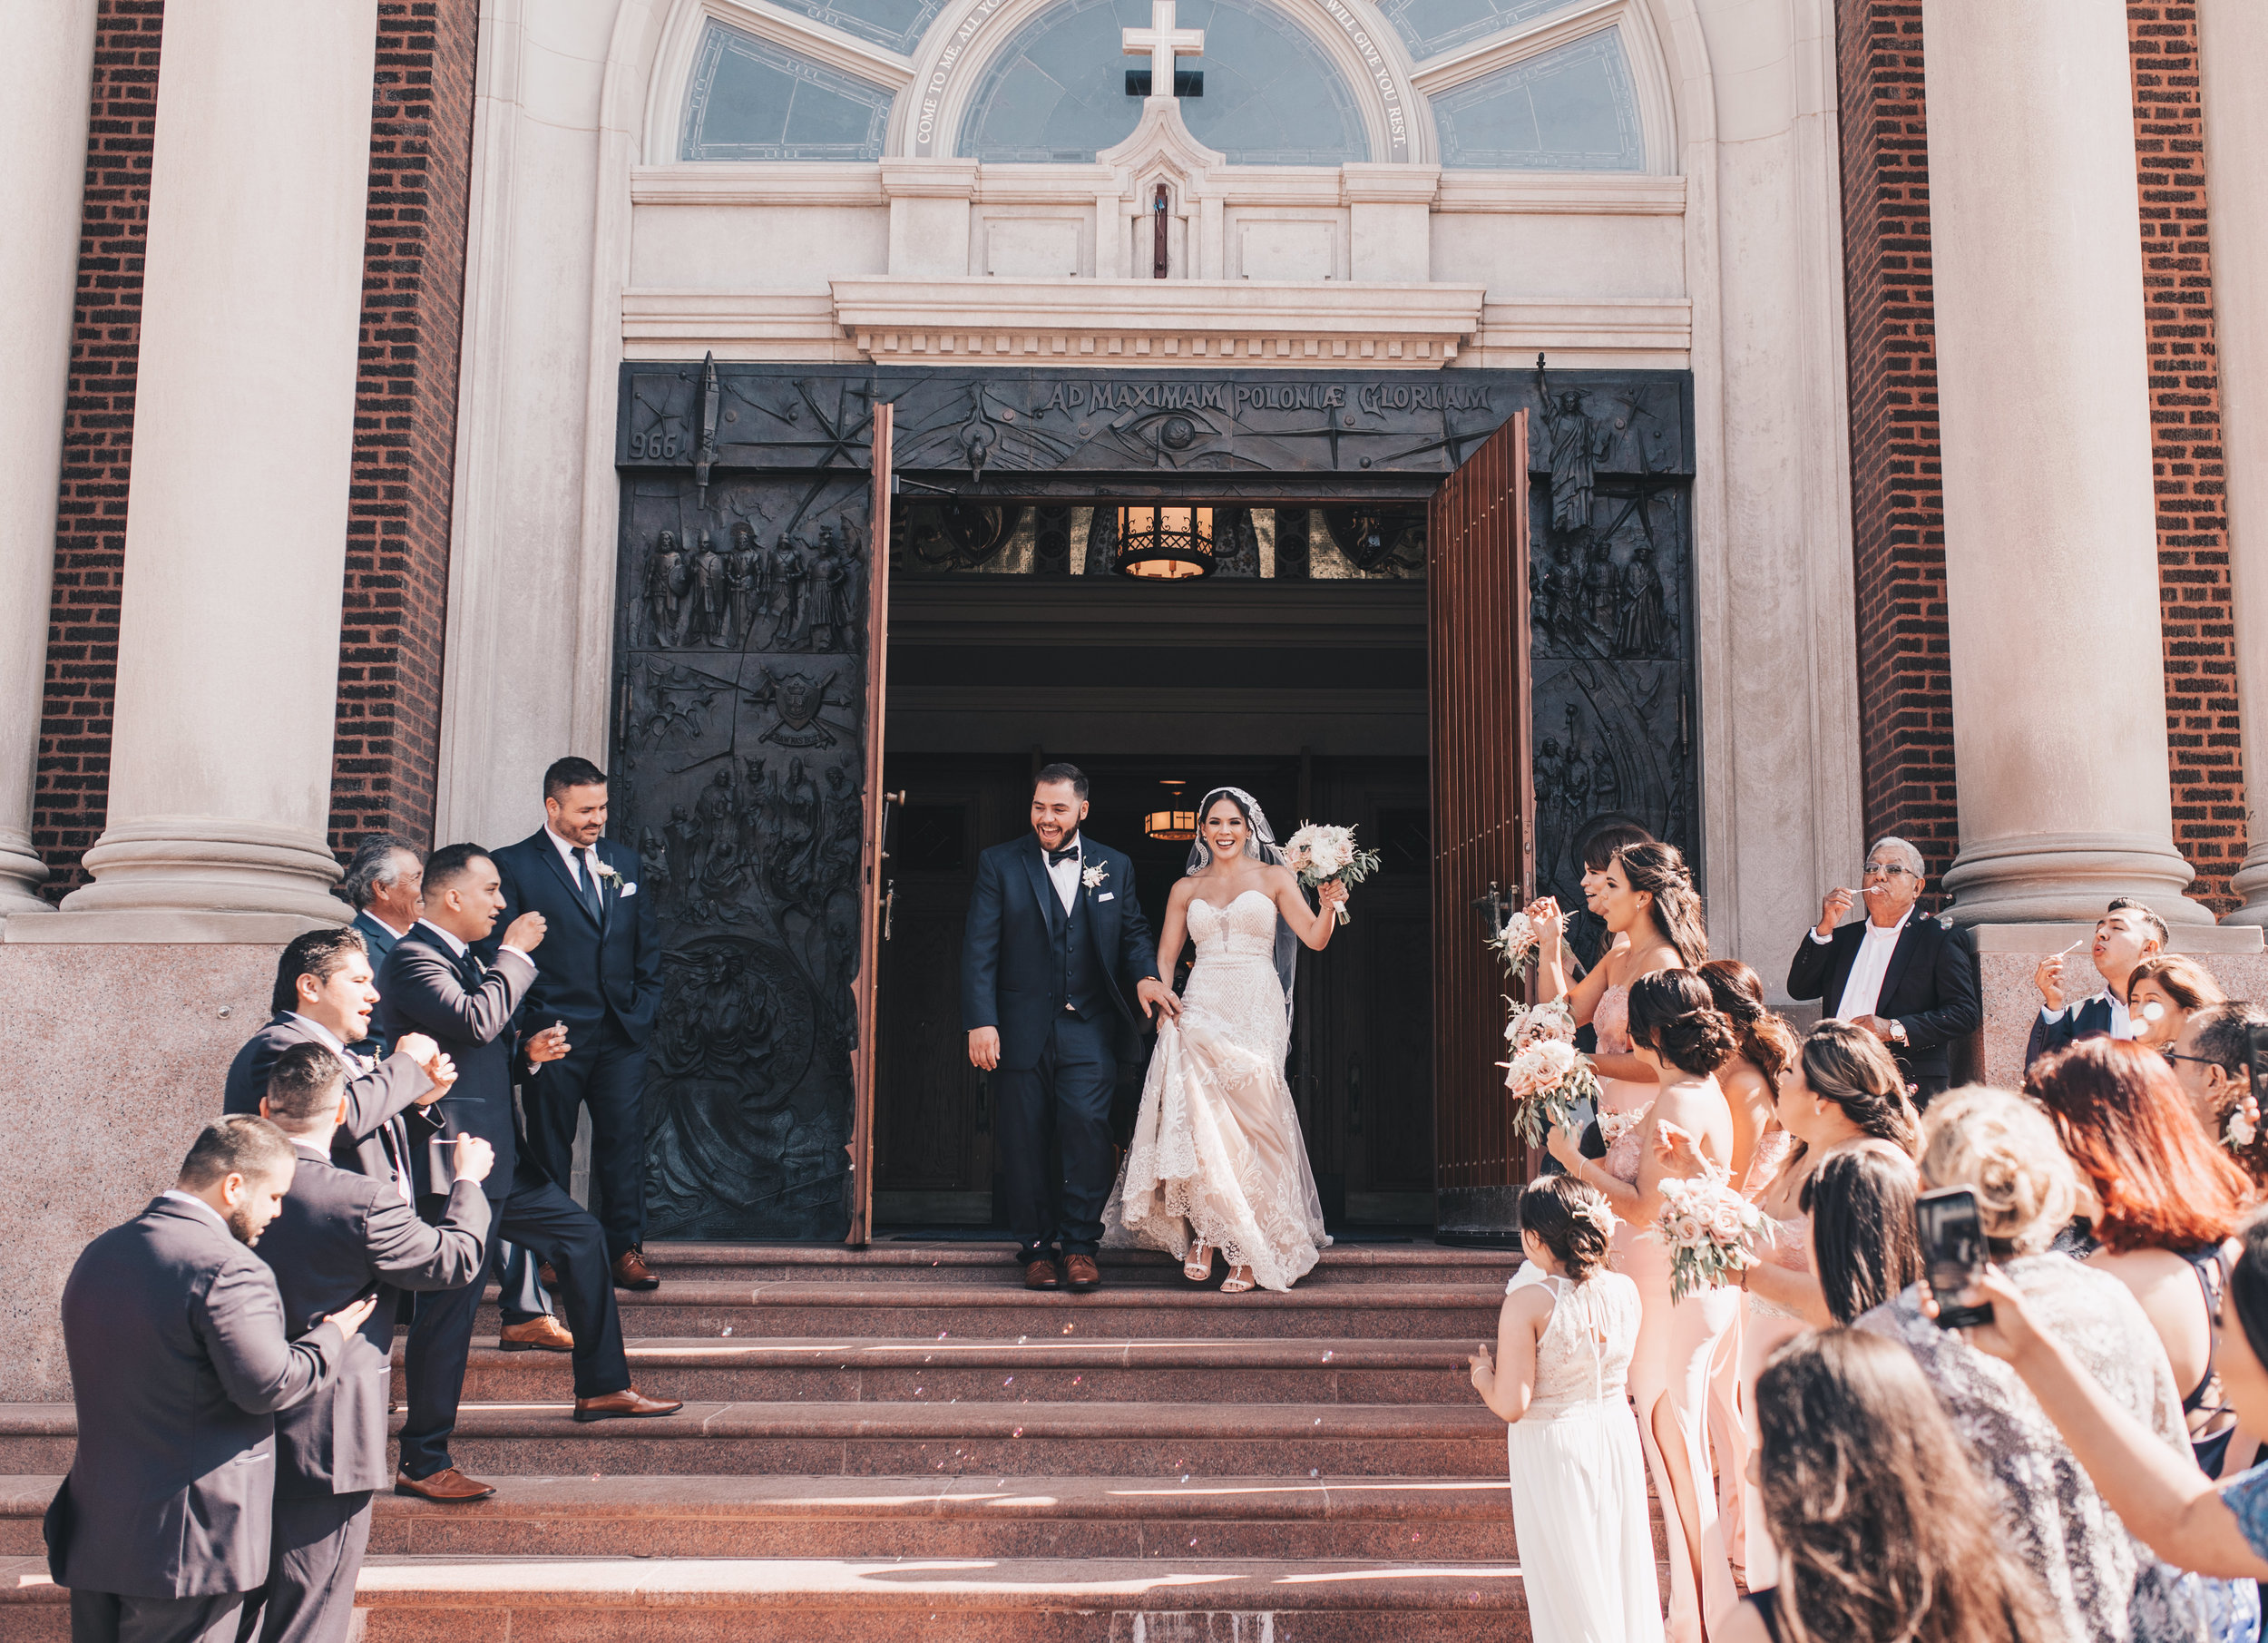 Illinois Wedding, Midwest Wedding, Chicago Wedding, Church Wedding Ceremony, Wedding Bubble Exit, Bride and Groom Photos 